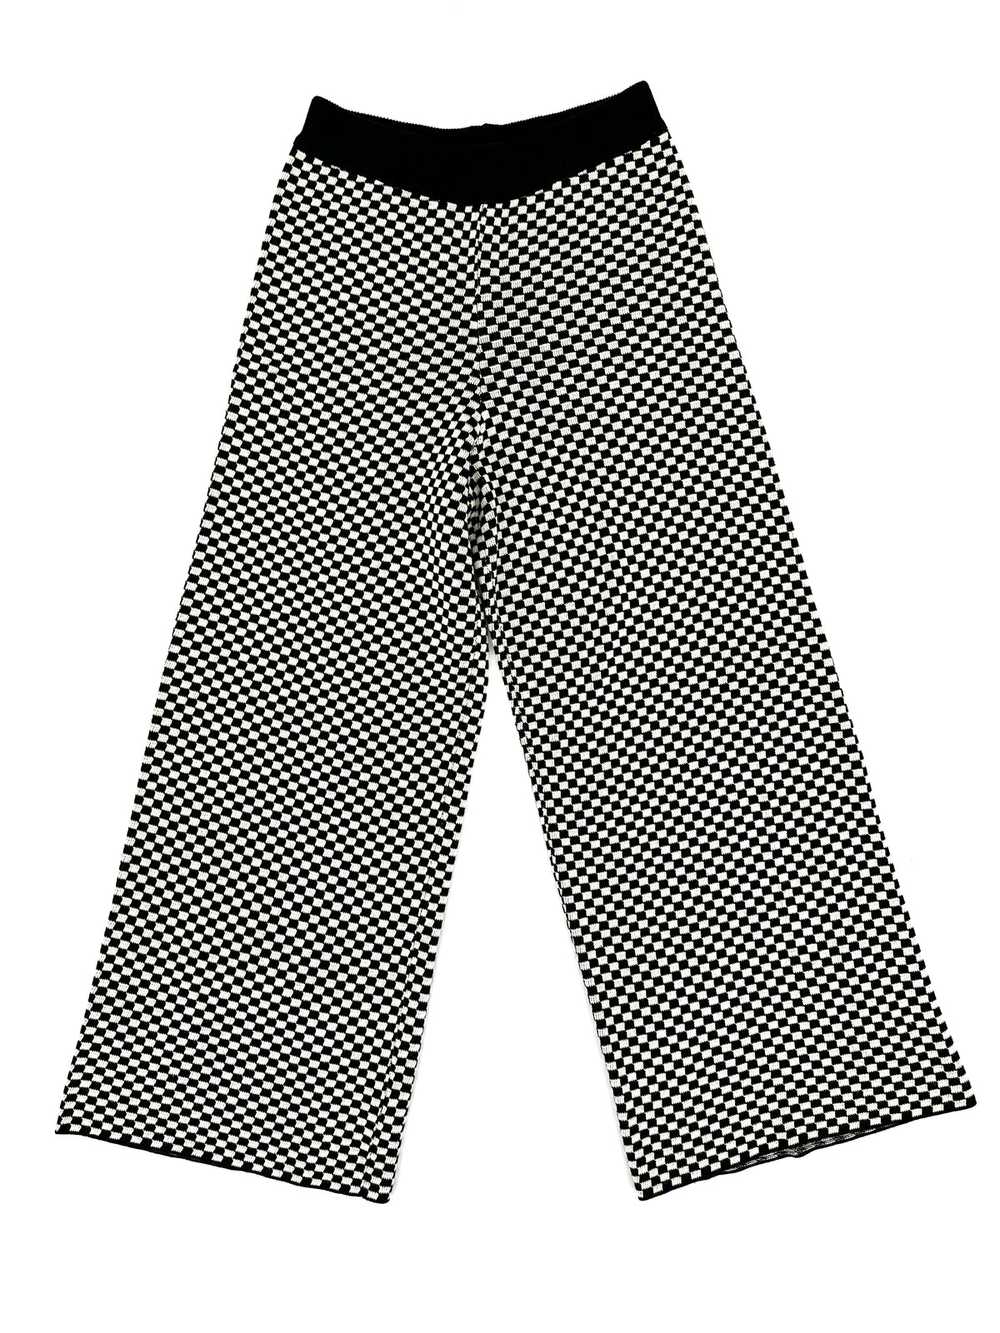 Saint Geraldine Checker Knit Pant Set - image 5